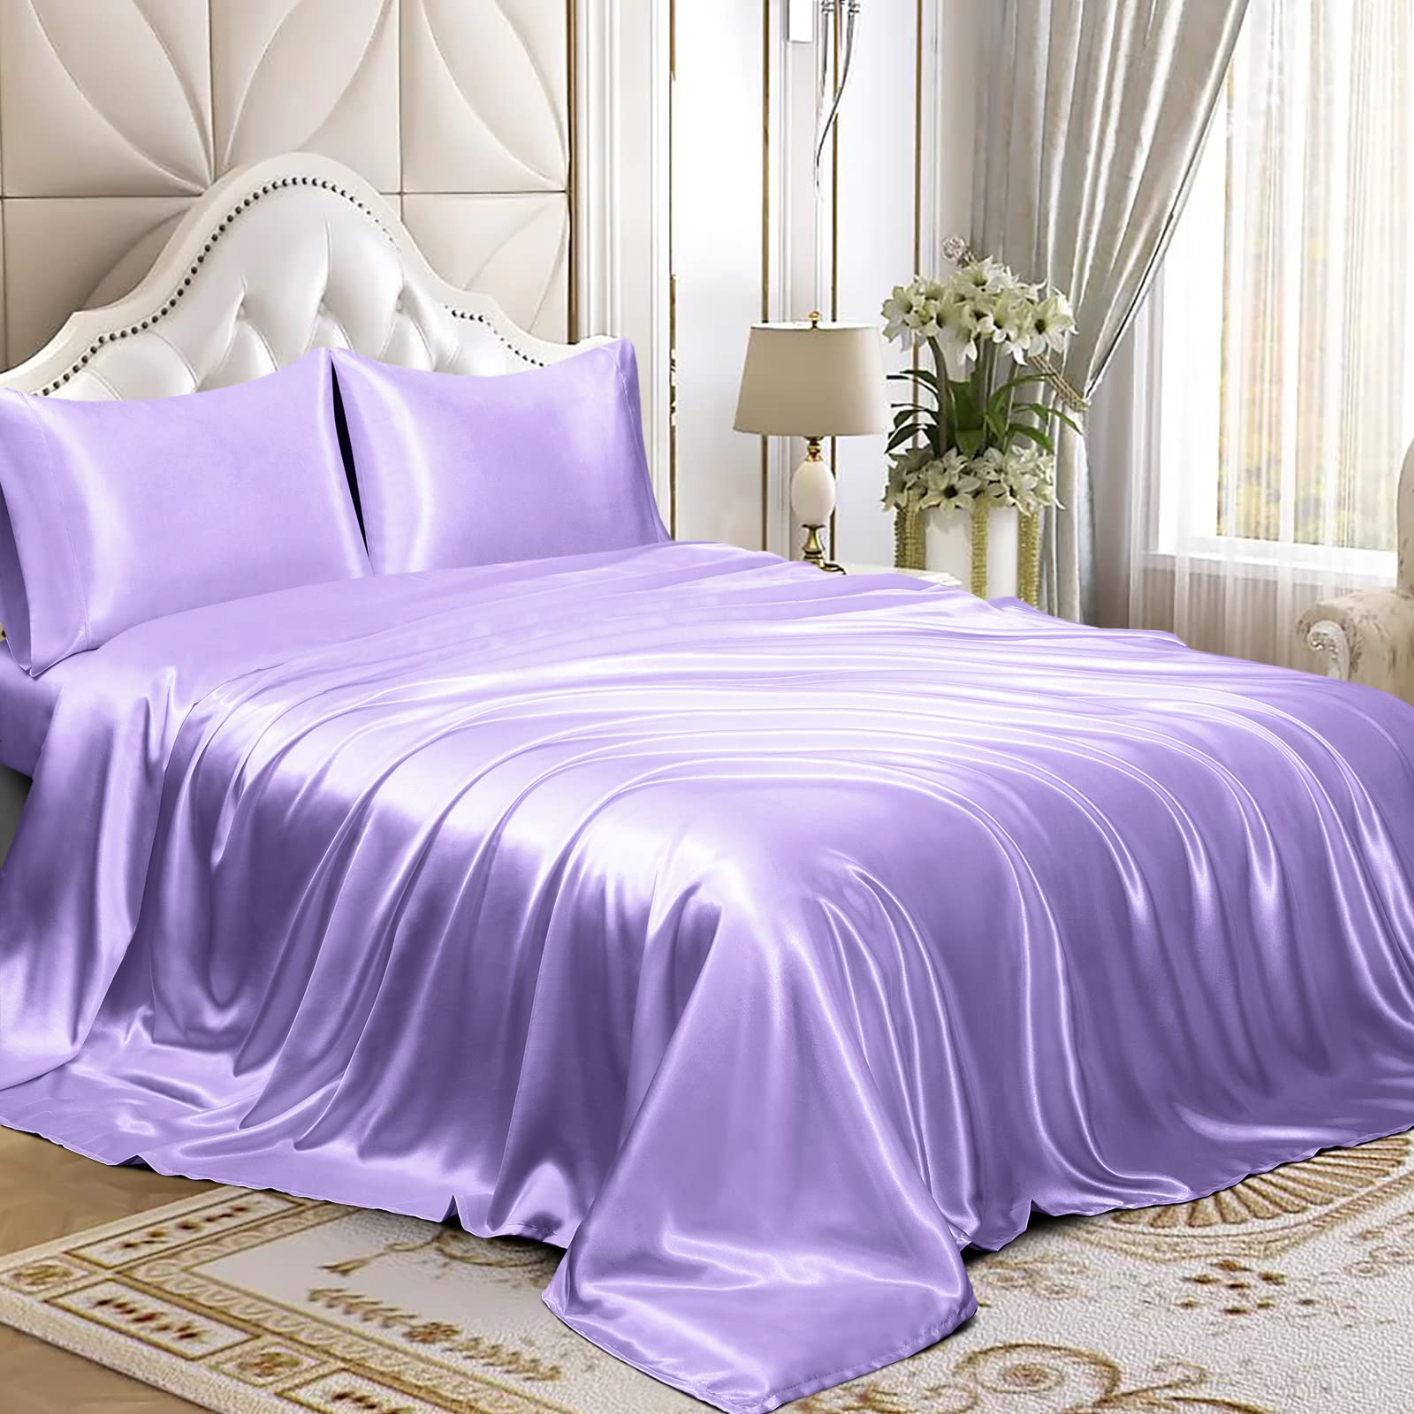 JT013-3 4pcs Satin Sheets Set Luxury Silky Satin Bedding Set, 1 Fitted Sheet + 1 Flat Sheet + 2 Pillowcases